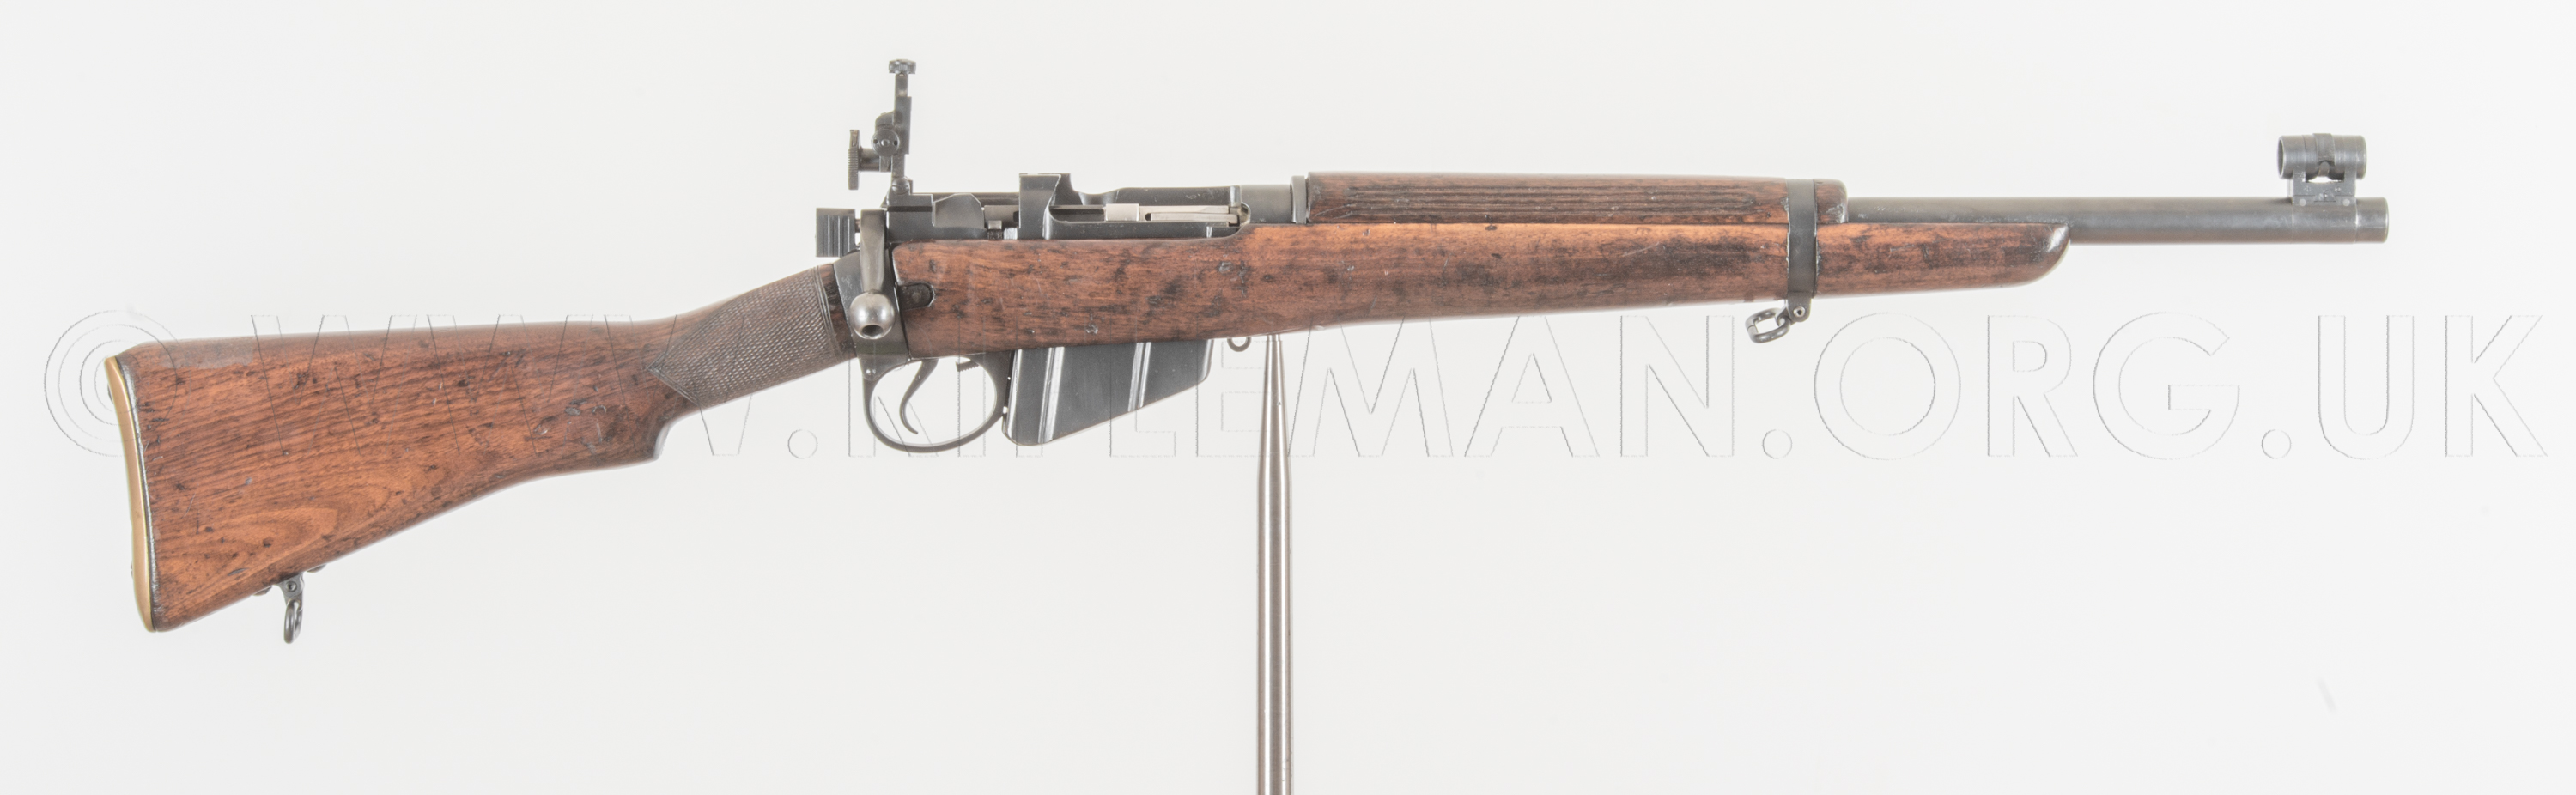 Lee-Enfield Rifle .22 No.5 trials rifle by BSA